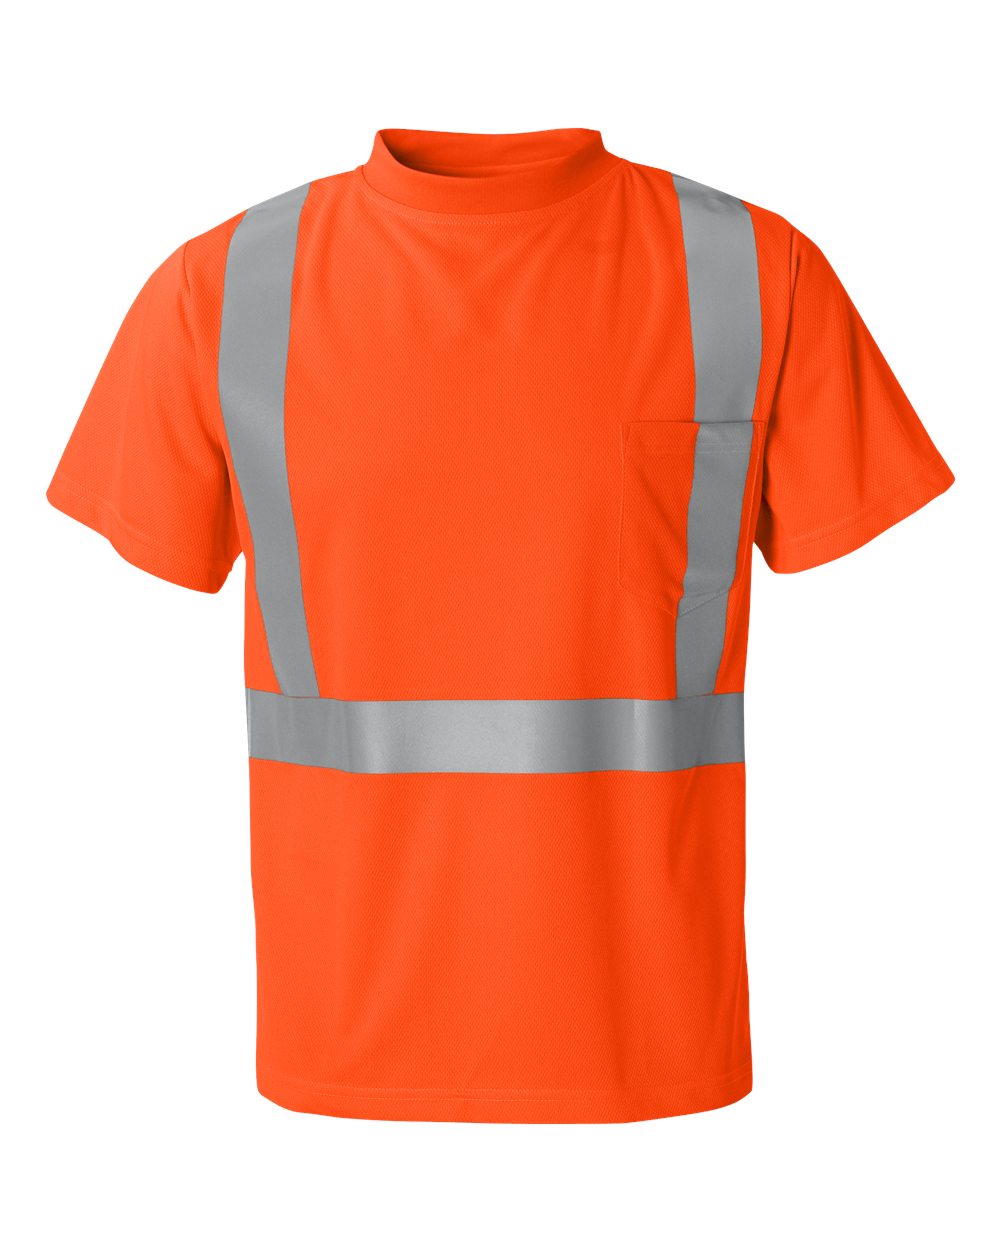 Kishigo High Performance Tee T Shirt Hi-Vis PPE Reflective 9110 up to ...